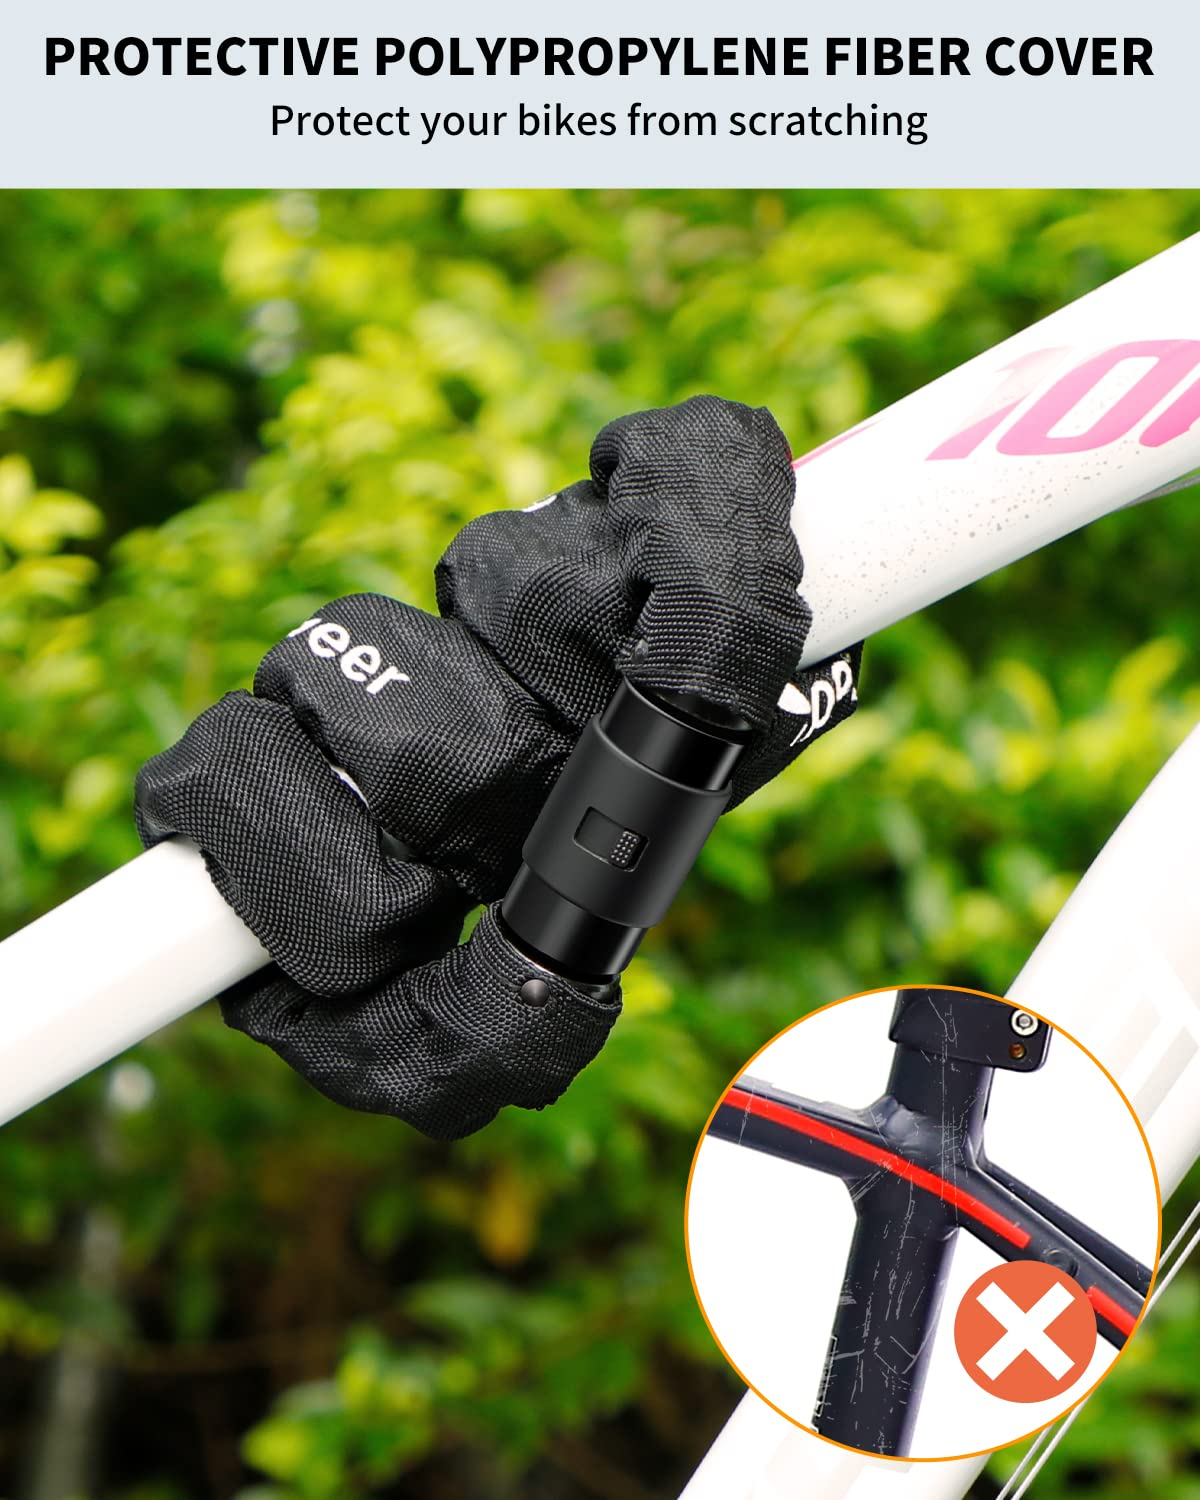 Sportneer 8mm Thicker Bicycle Chain Lock Heavy Duty Anti-Theft